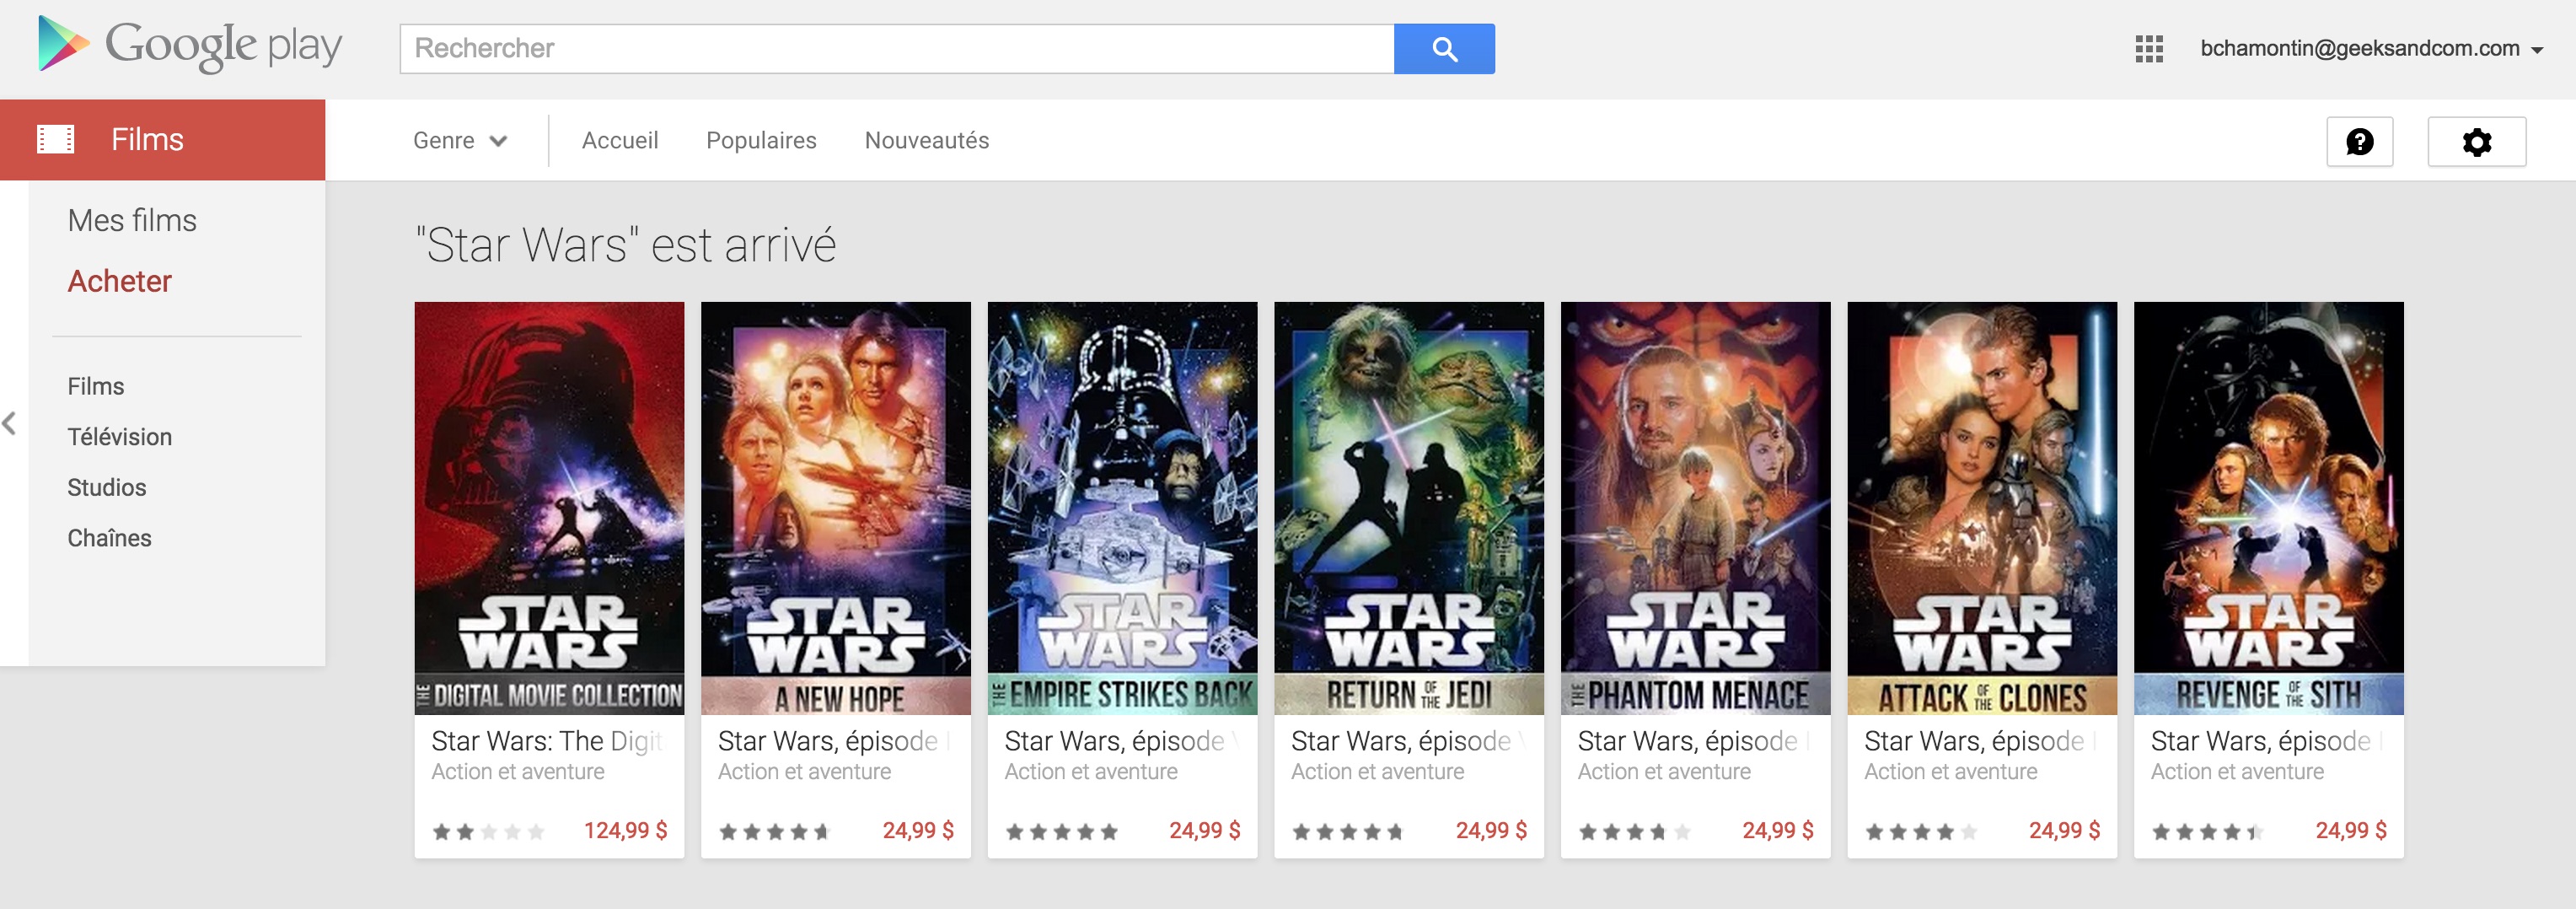 Star Wars Digital Movie Collection Google Play